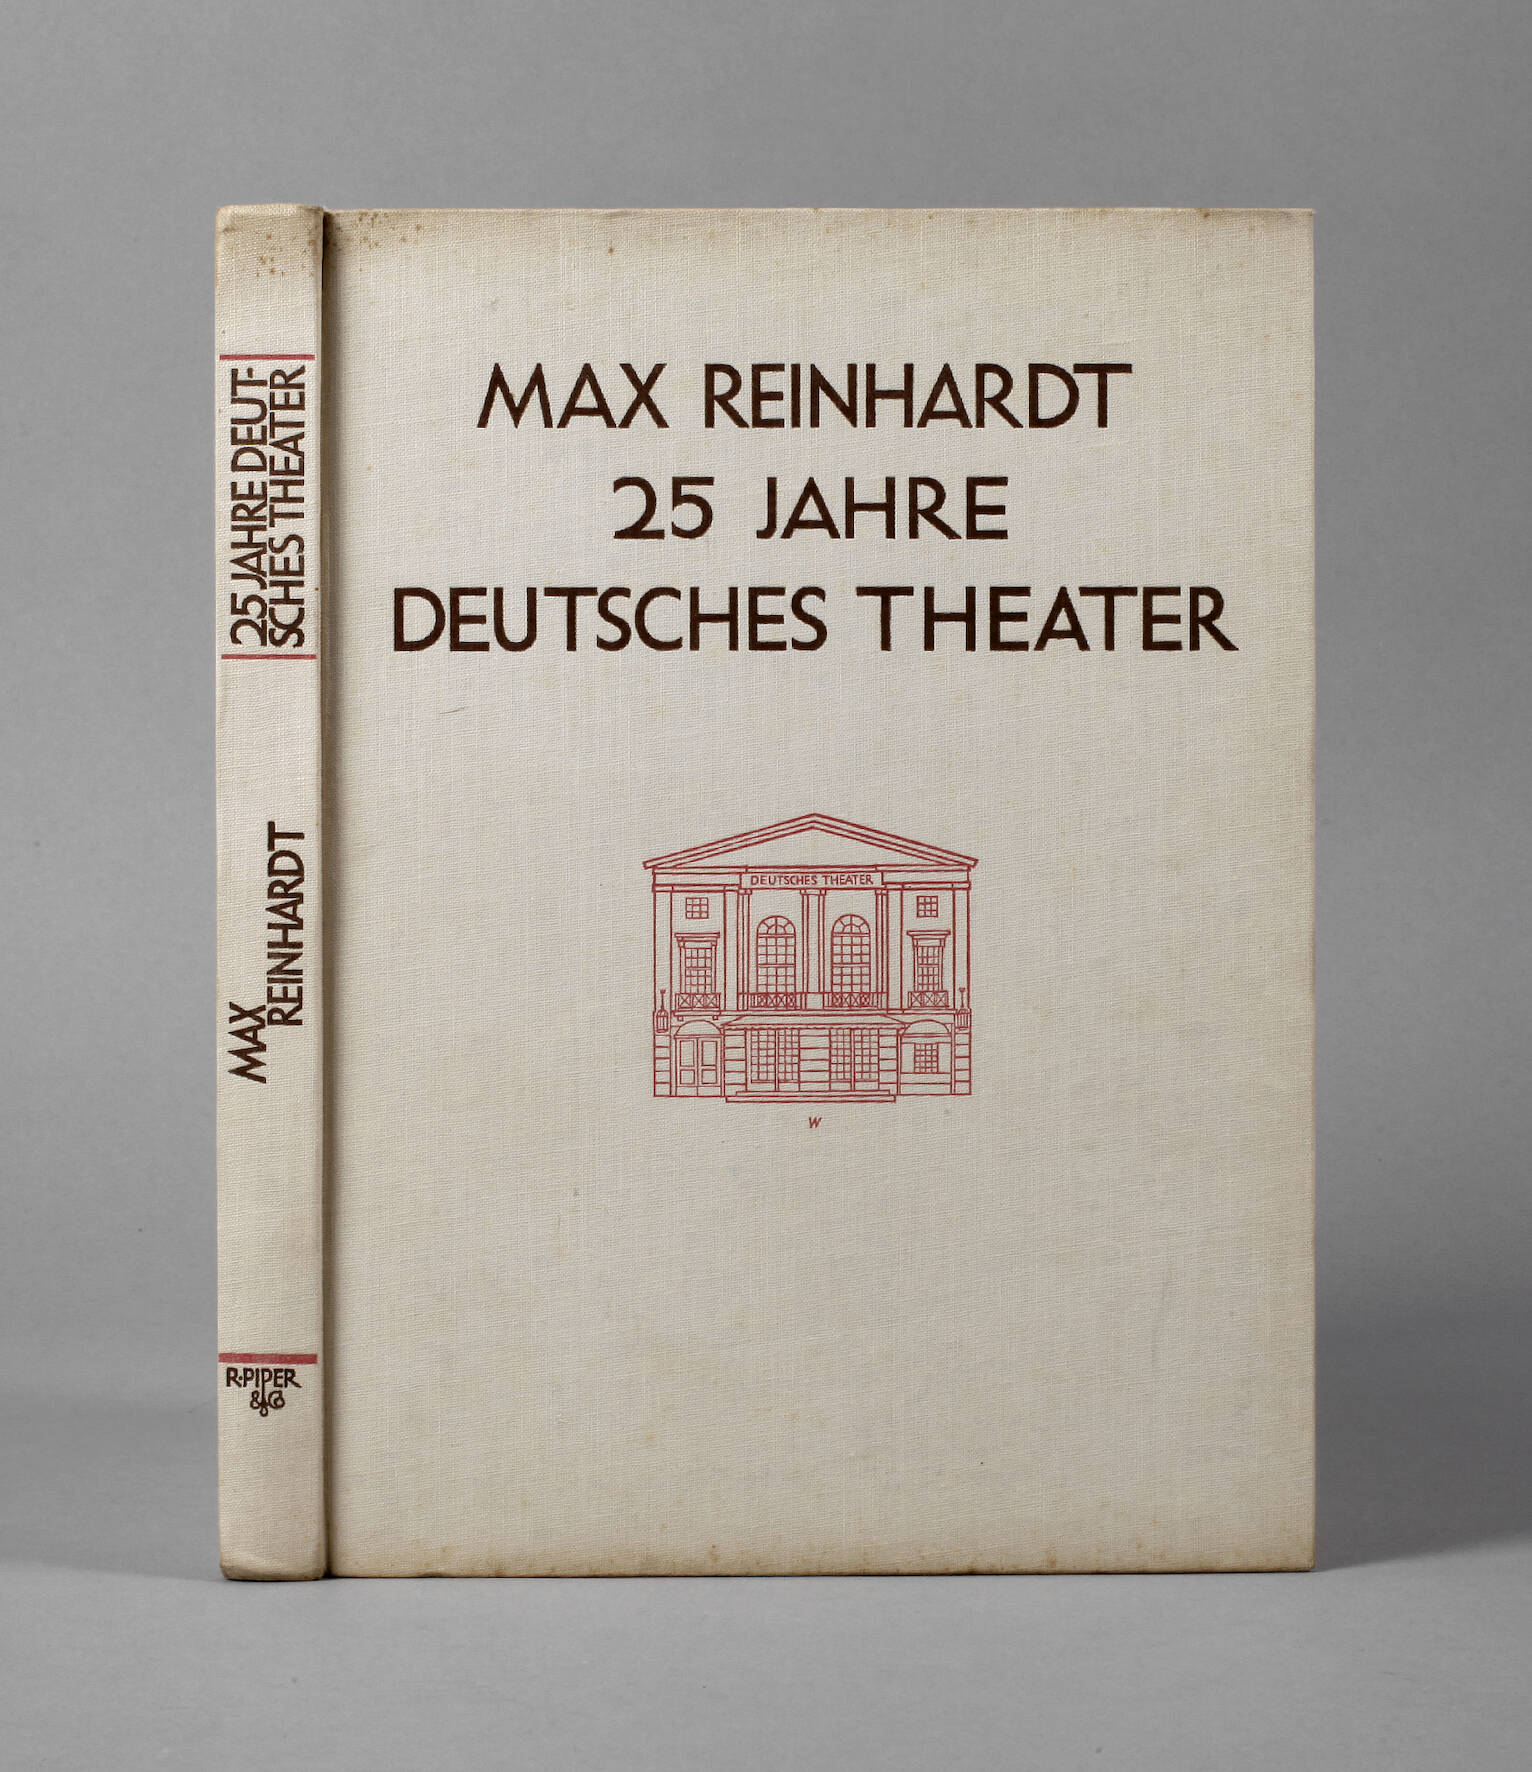 Autogramm Max Reinhard